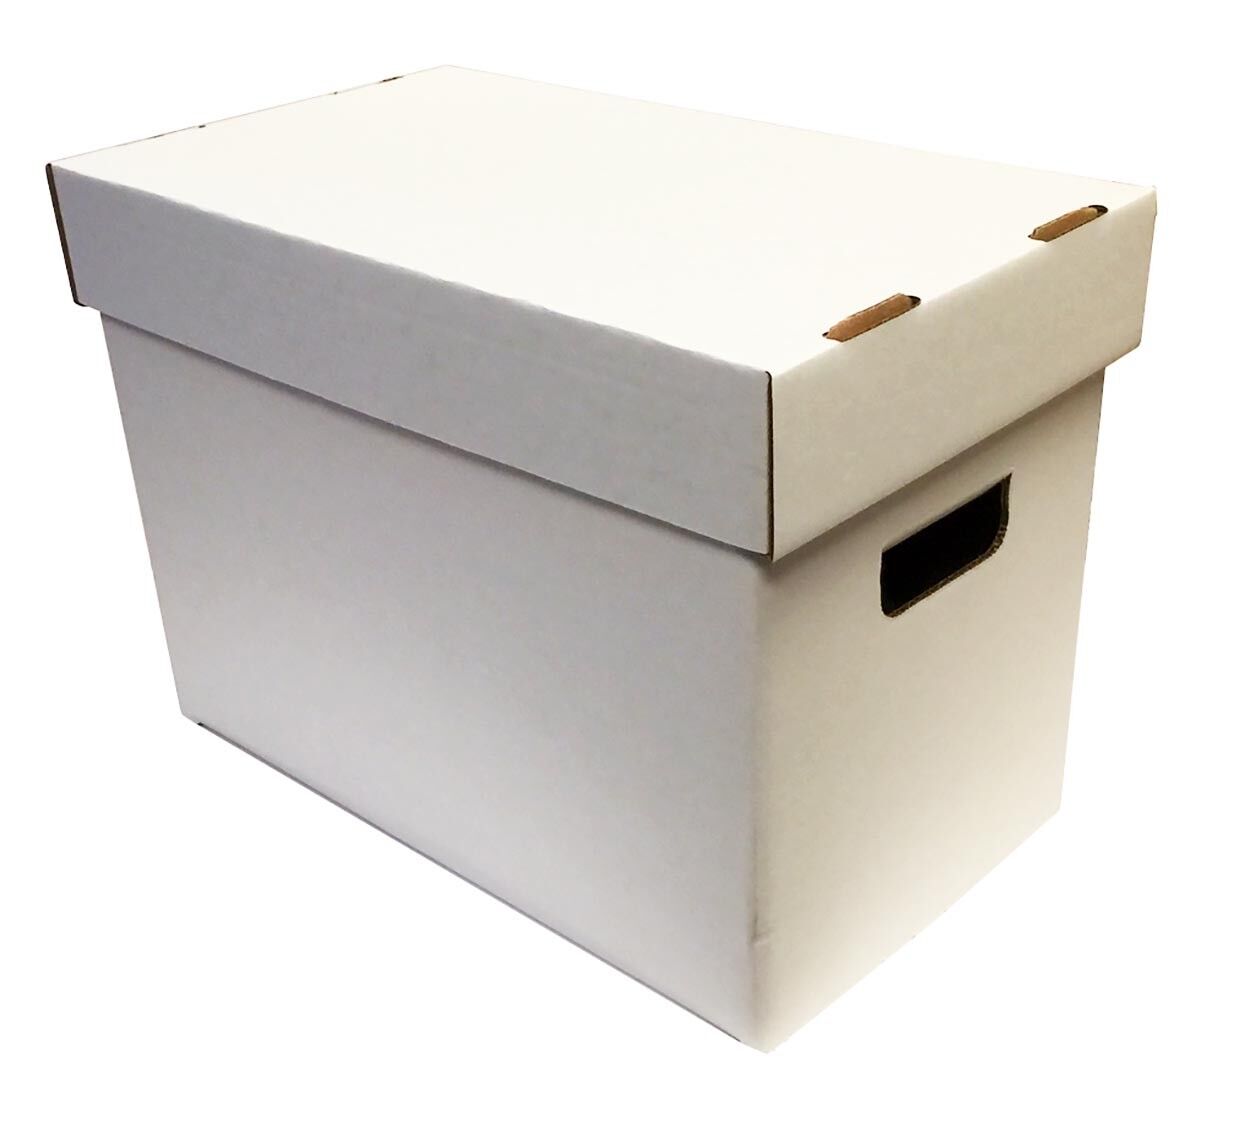 One New Max Pro Magazine Size Corrugated Cardboard Storage Box